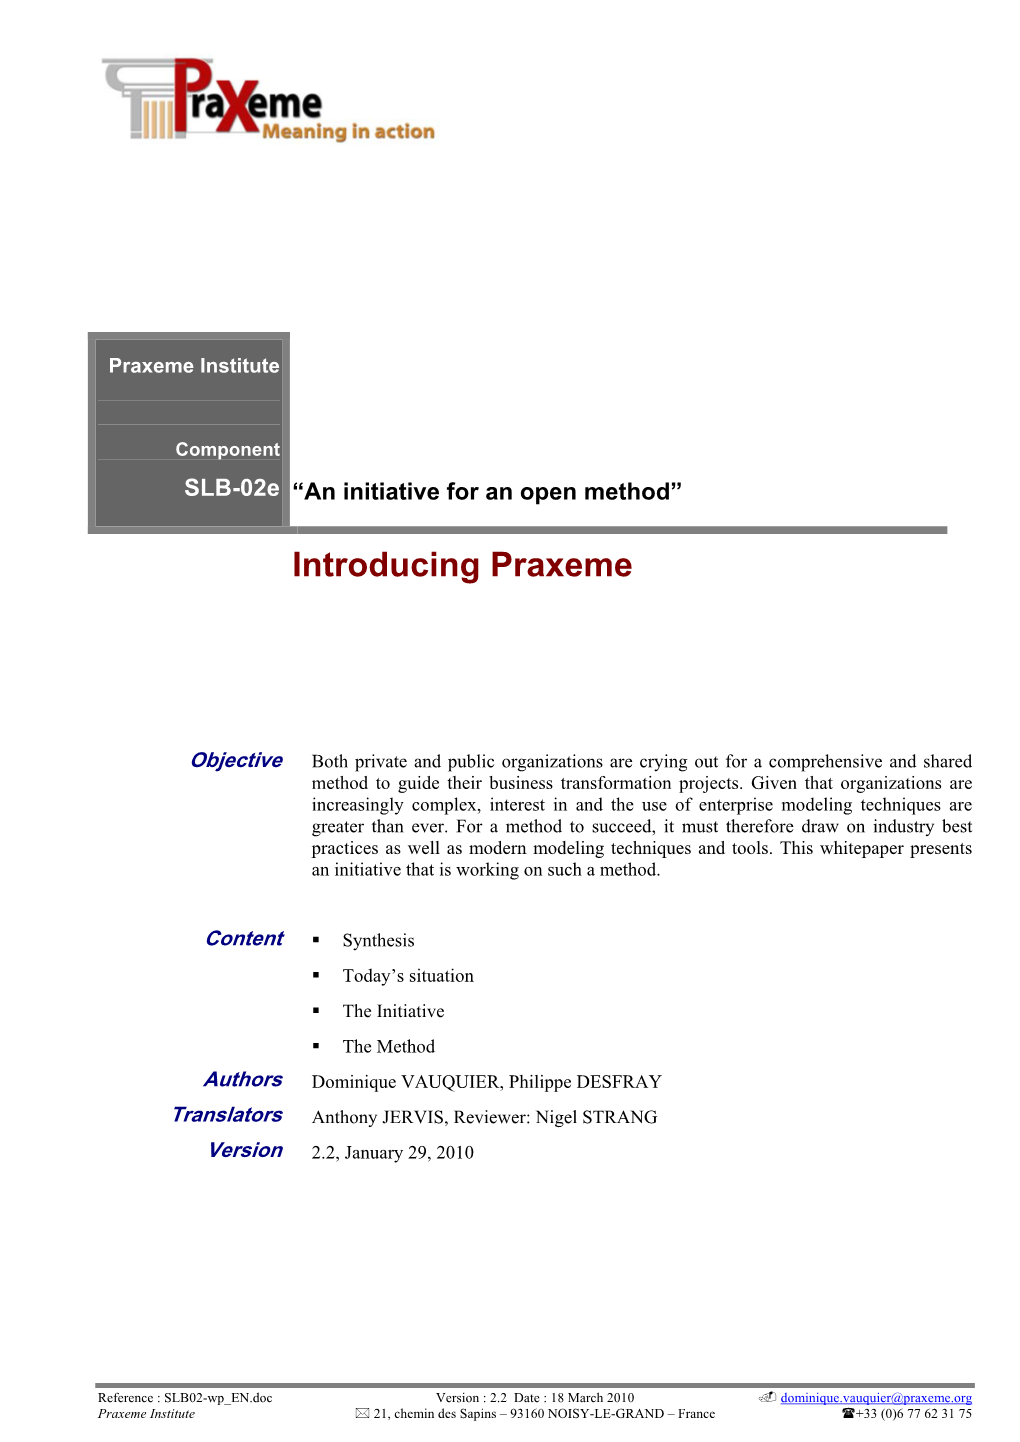 Introducing Praxeme